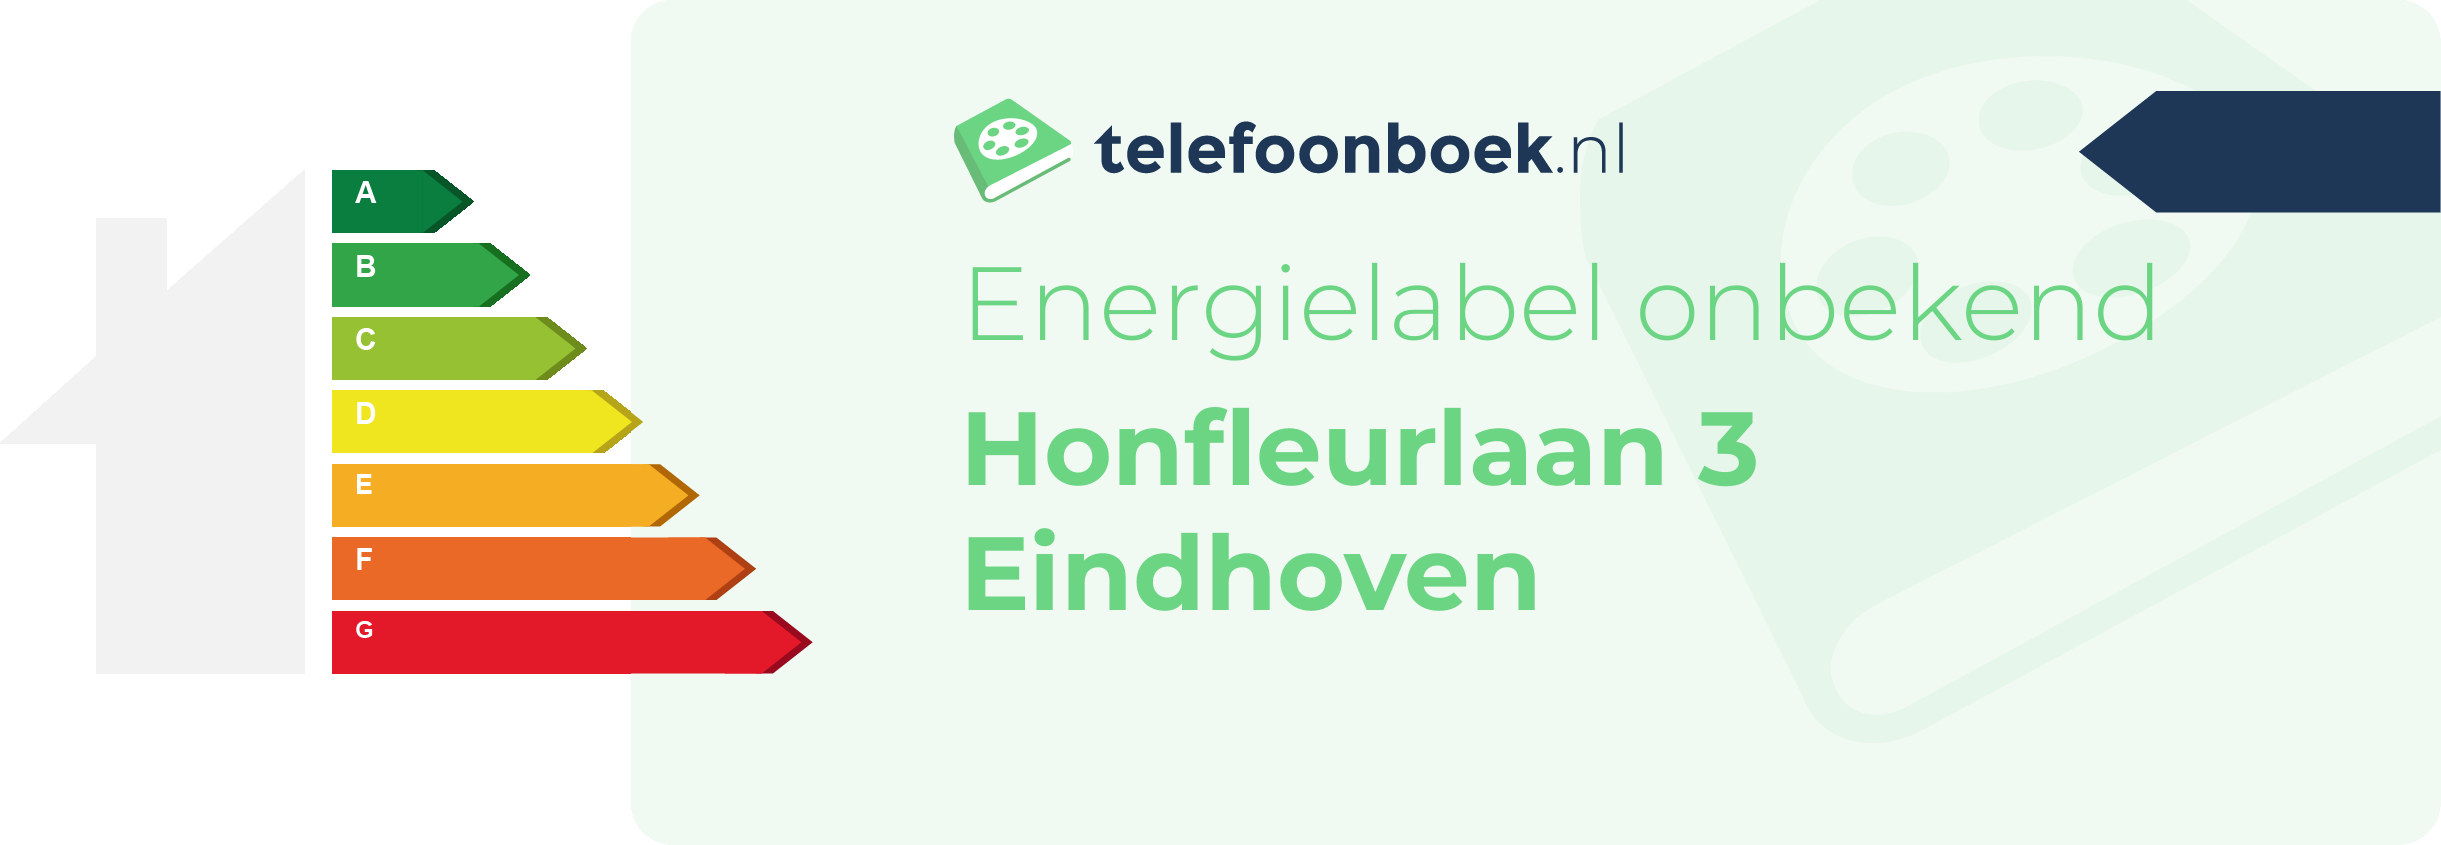 Energielabel Honfleurlaan 3 Eindhoven